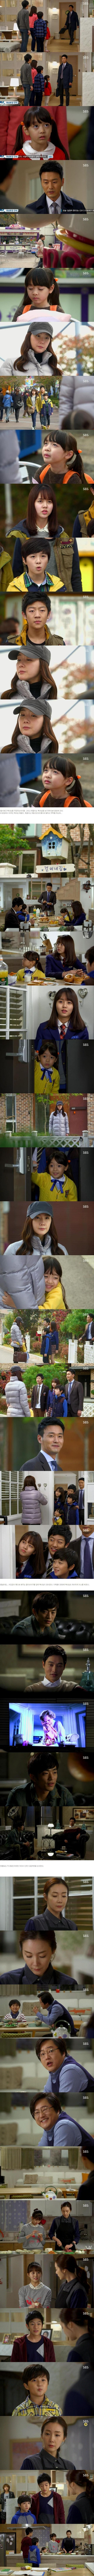 episode 12 captures for the Korean drama 'Suspicious Housekeeper'